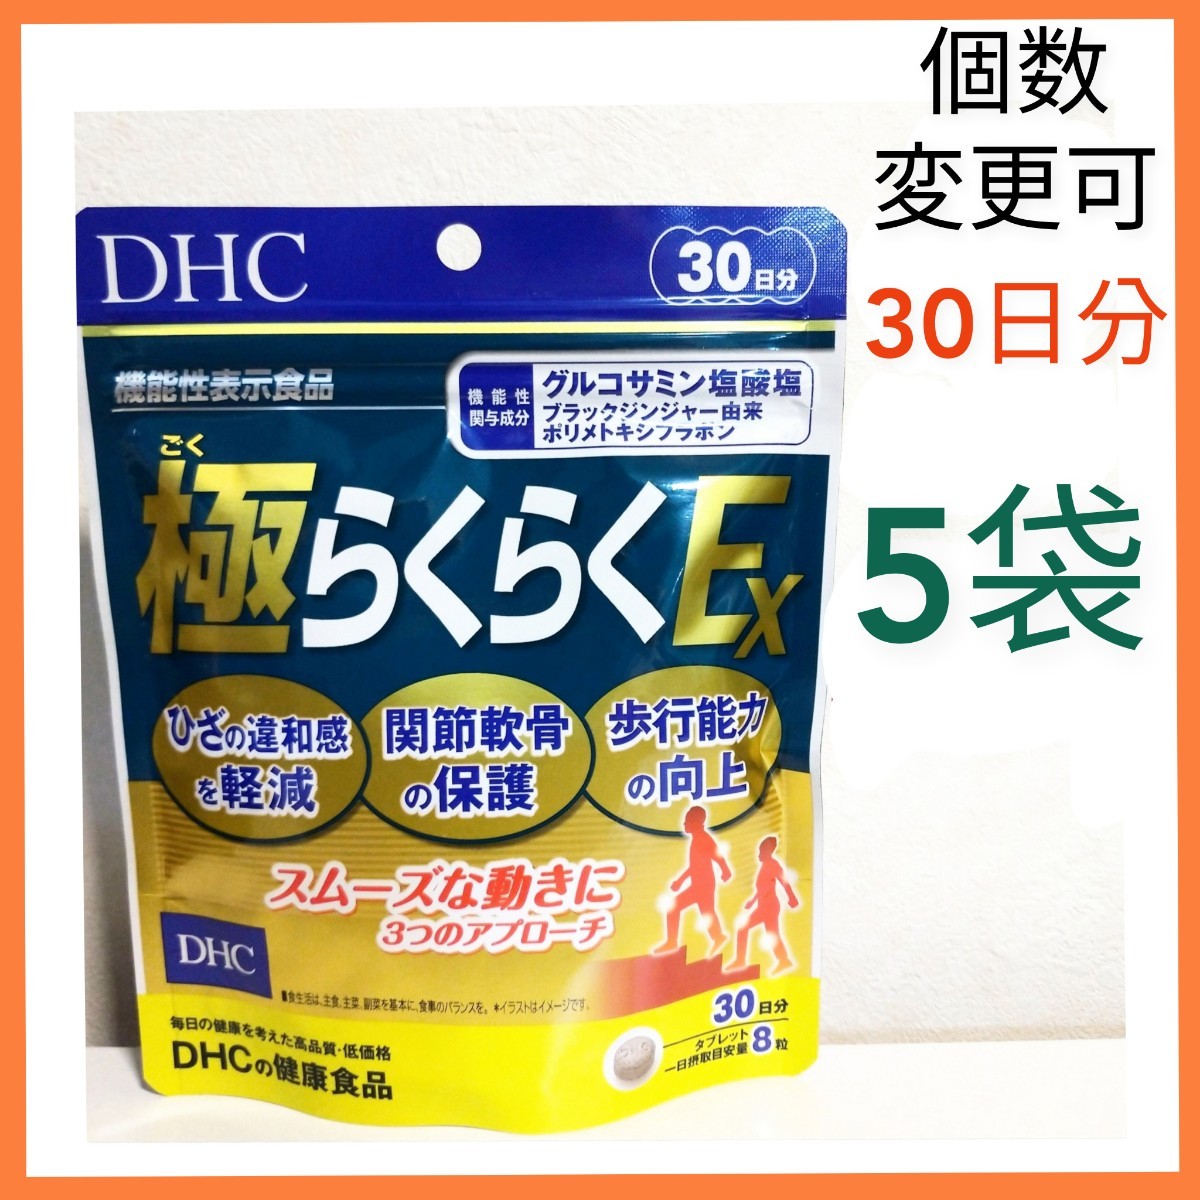 DHC 極らくらくEX 30日分 240粒×2袋 グルコサミン含有食品